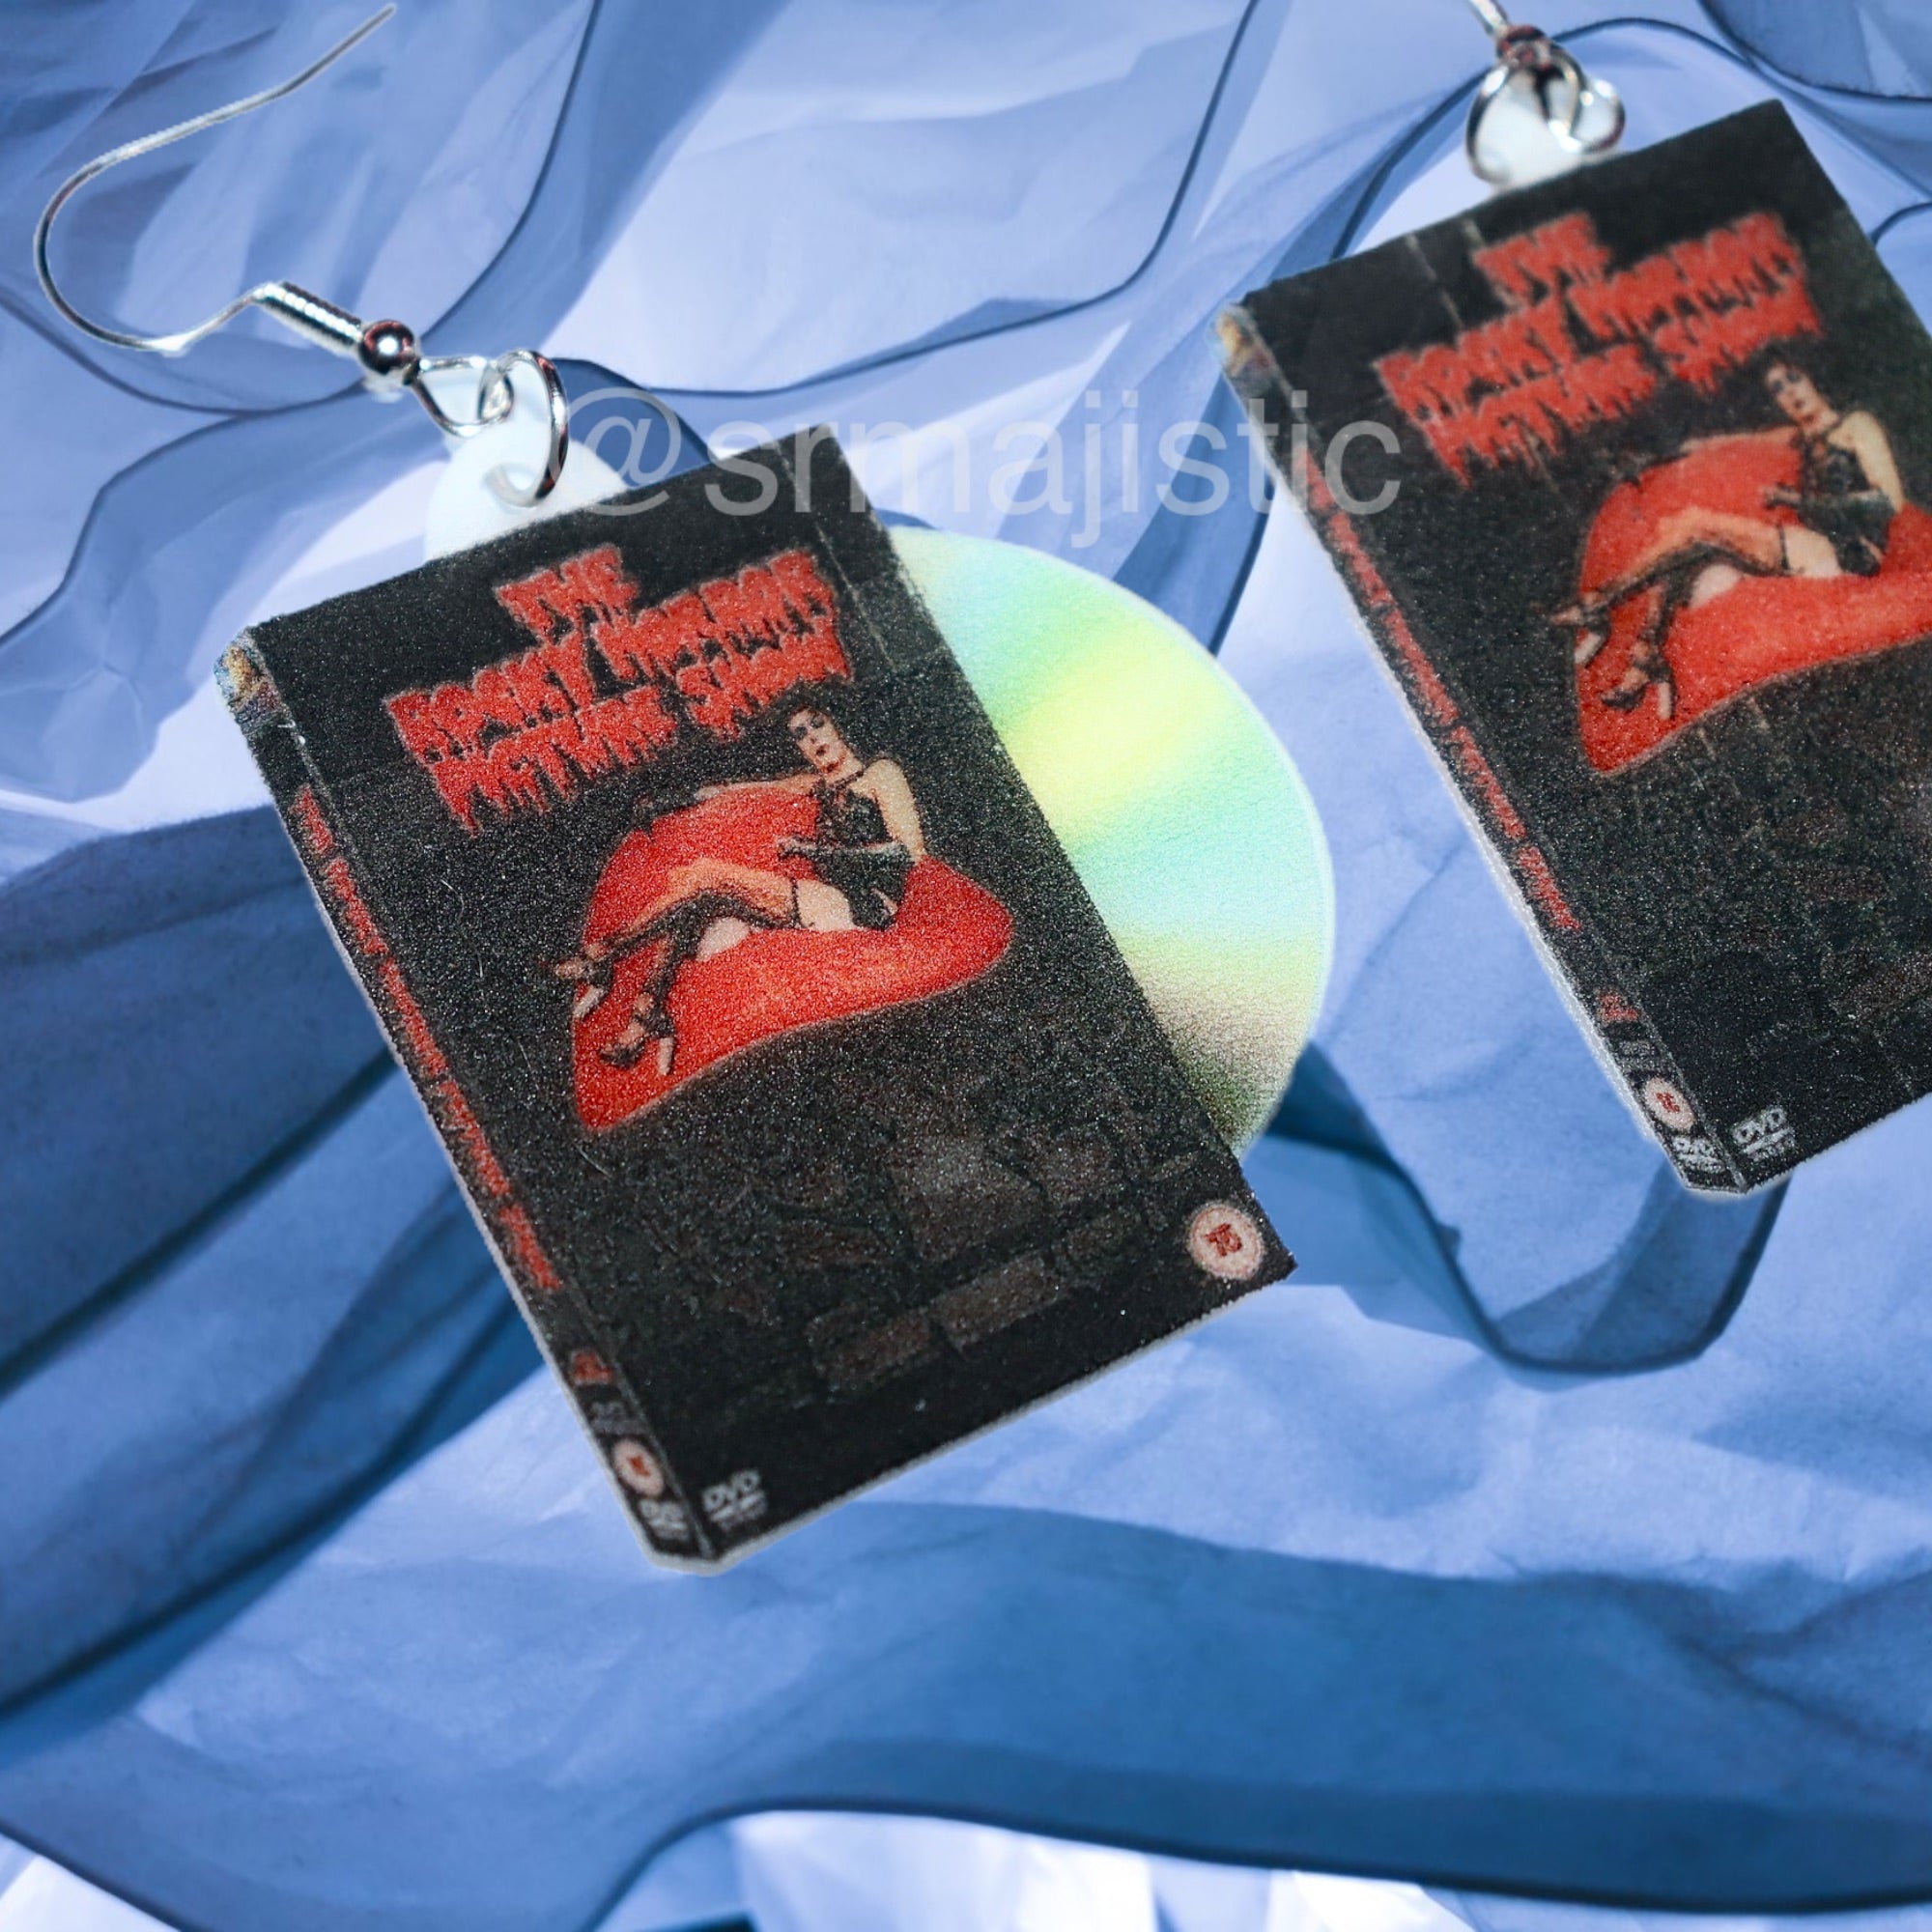 Rocky Horror Picture Show (1975) DVD 2D detailed Handmade Earrings!